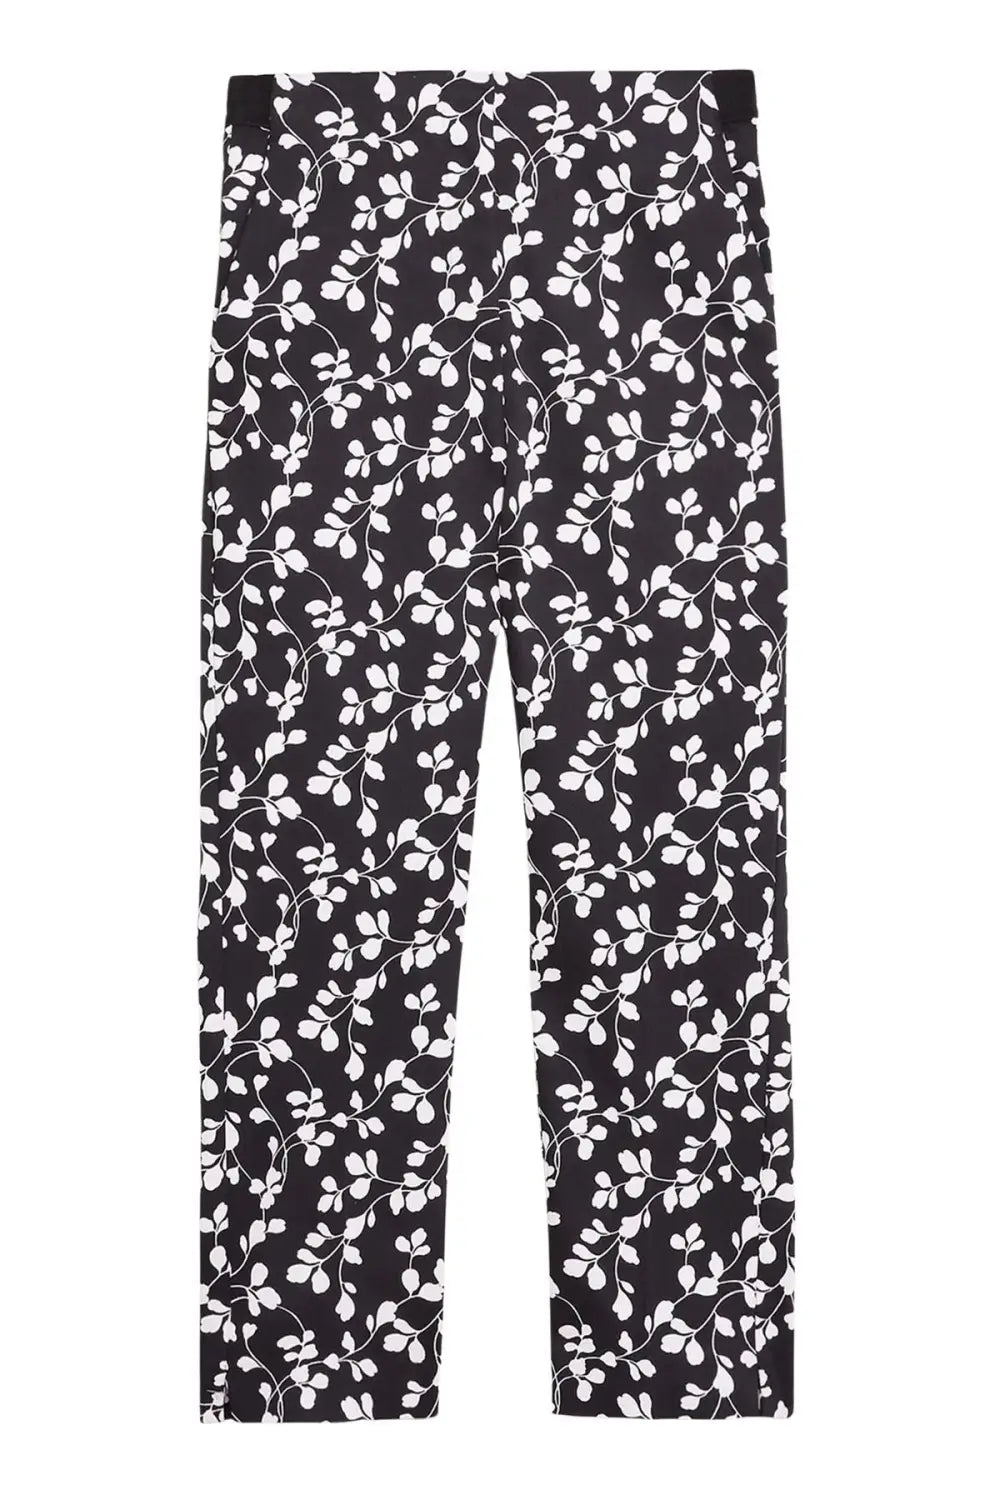 M&S Mia Slim Floral Crop Trousers